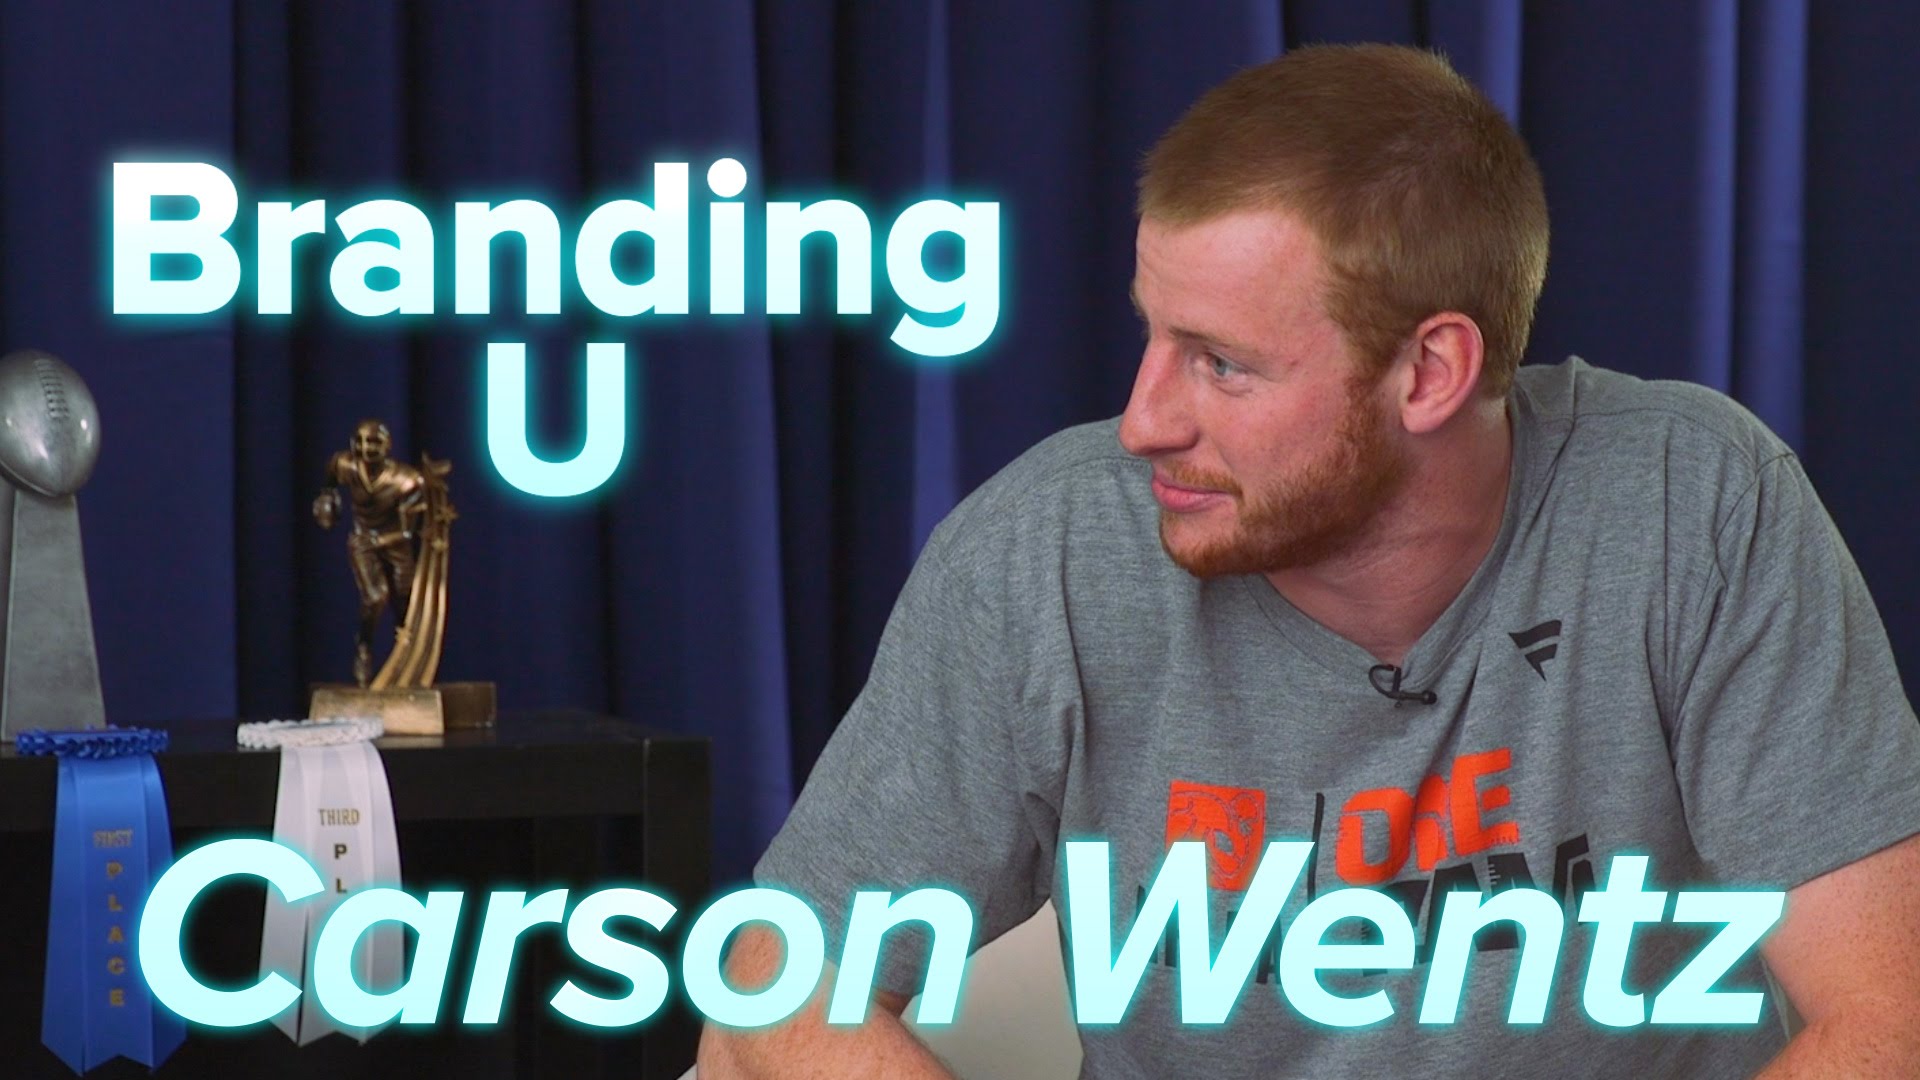 Carson Wentz goes to 'Branding U' with Nicky G